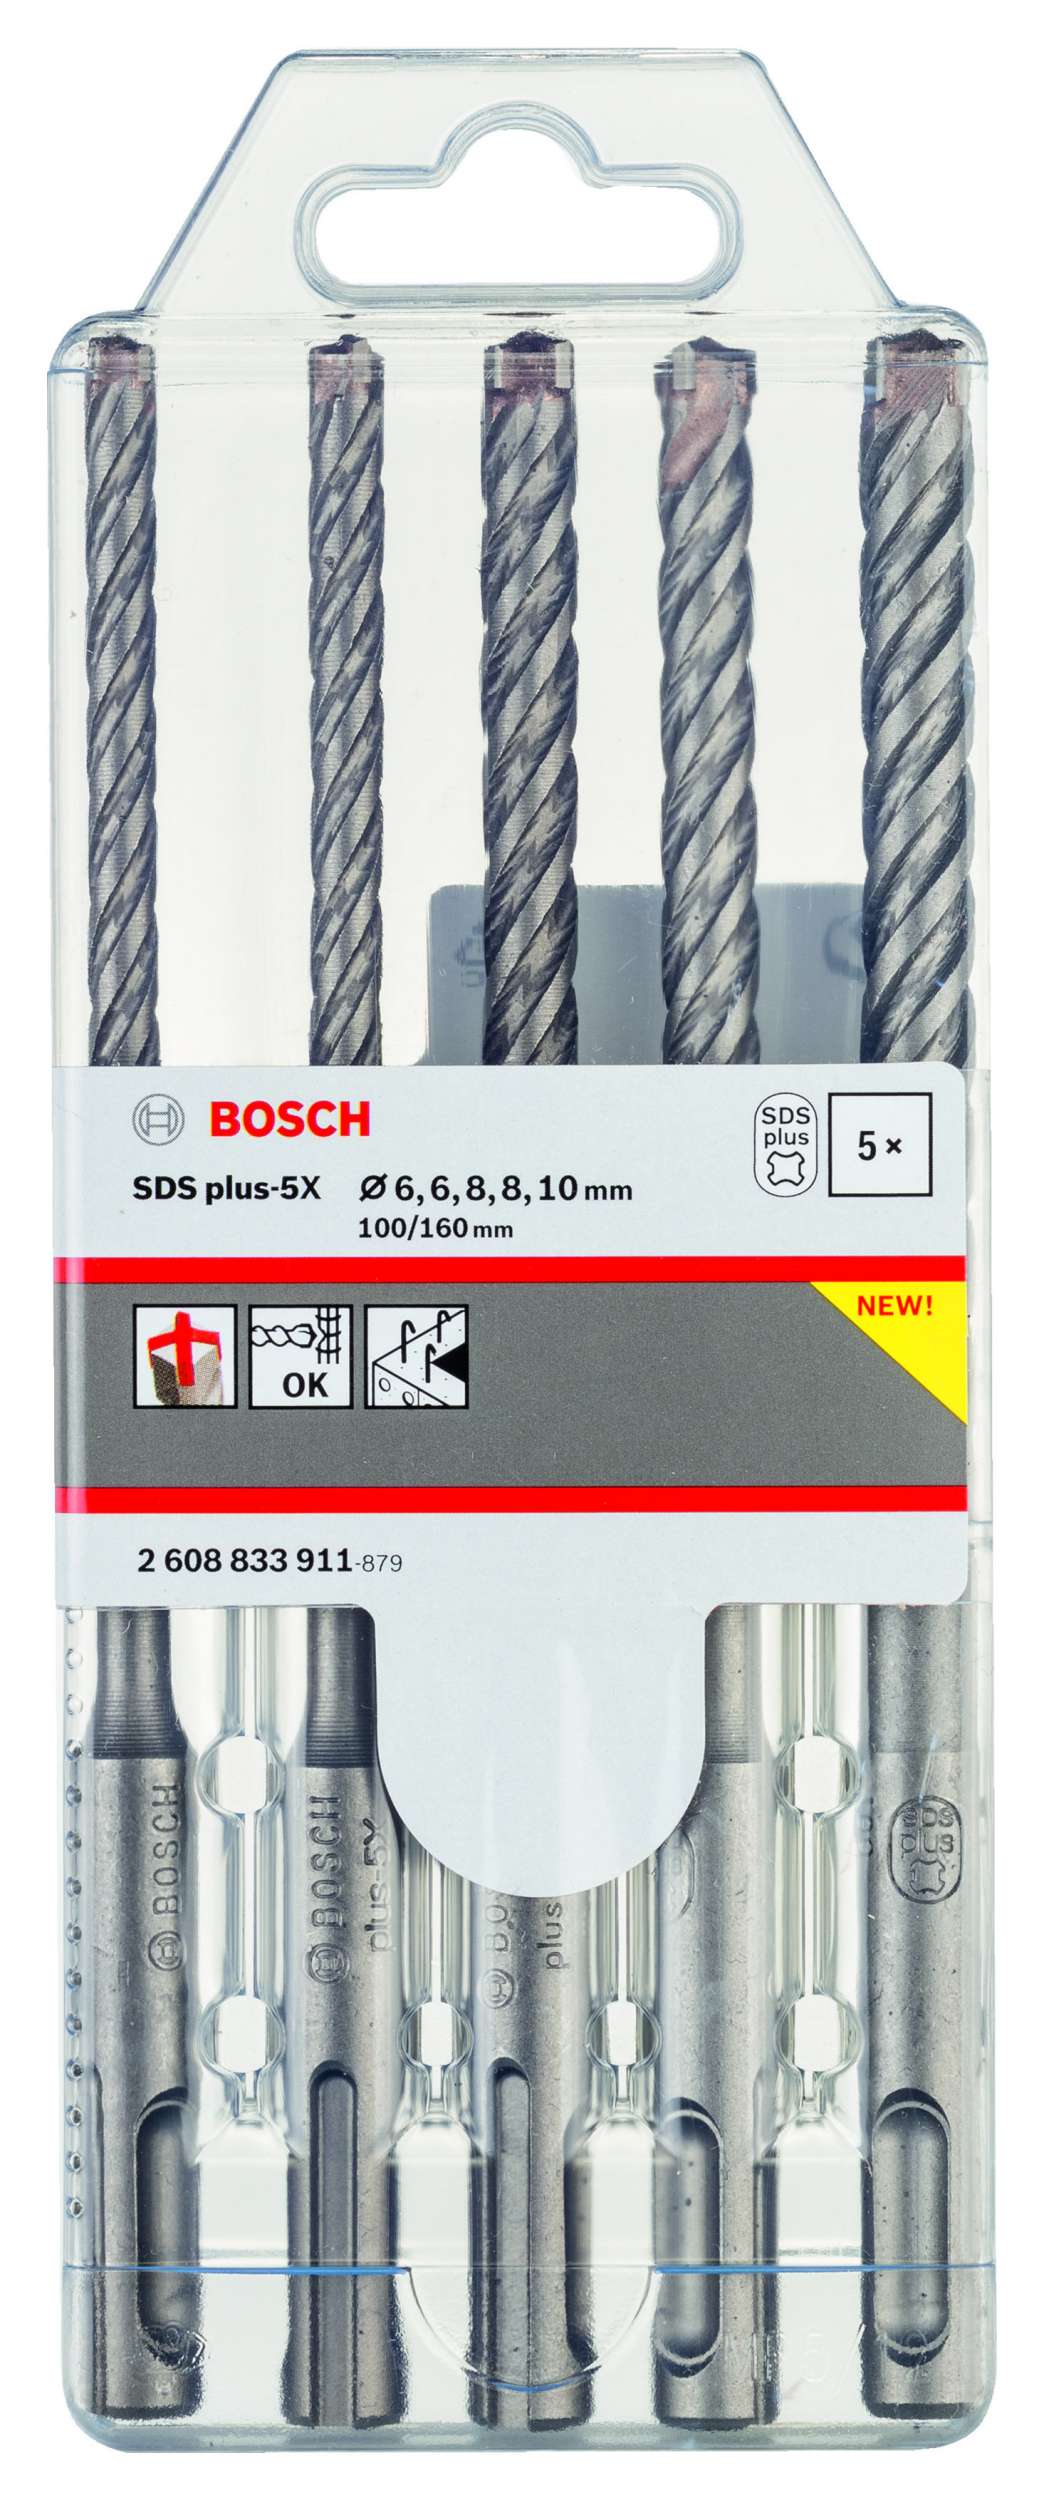 Bosch - SDS plus-5X Serisi Kırıcı Delici Matkap Ucu 5 Parça Set (6,6,8,8,10 x 160 mm)